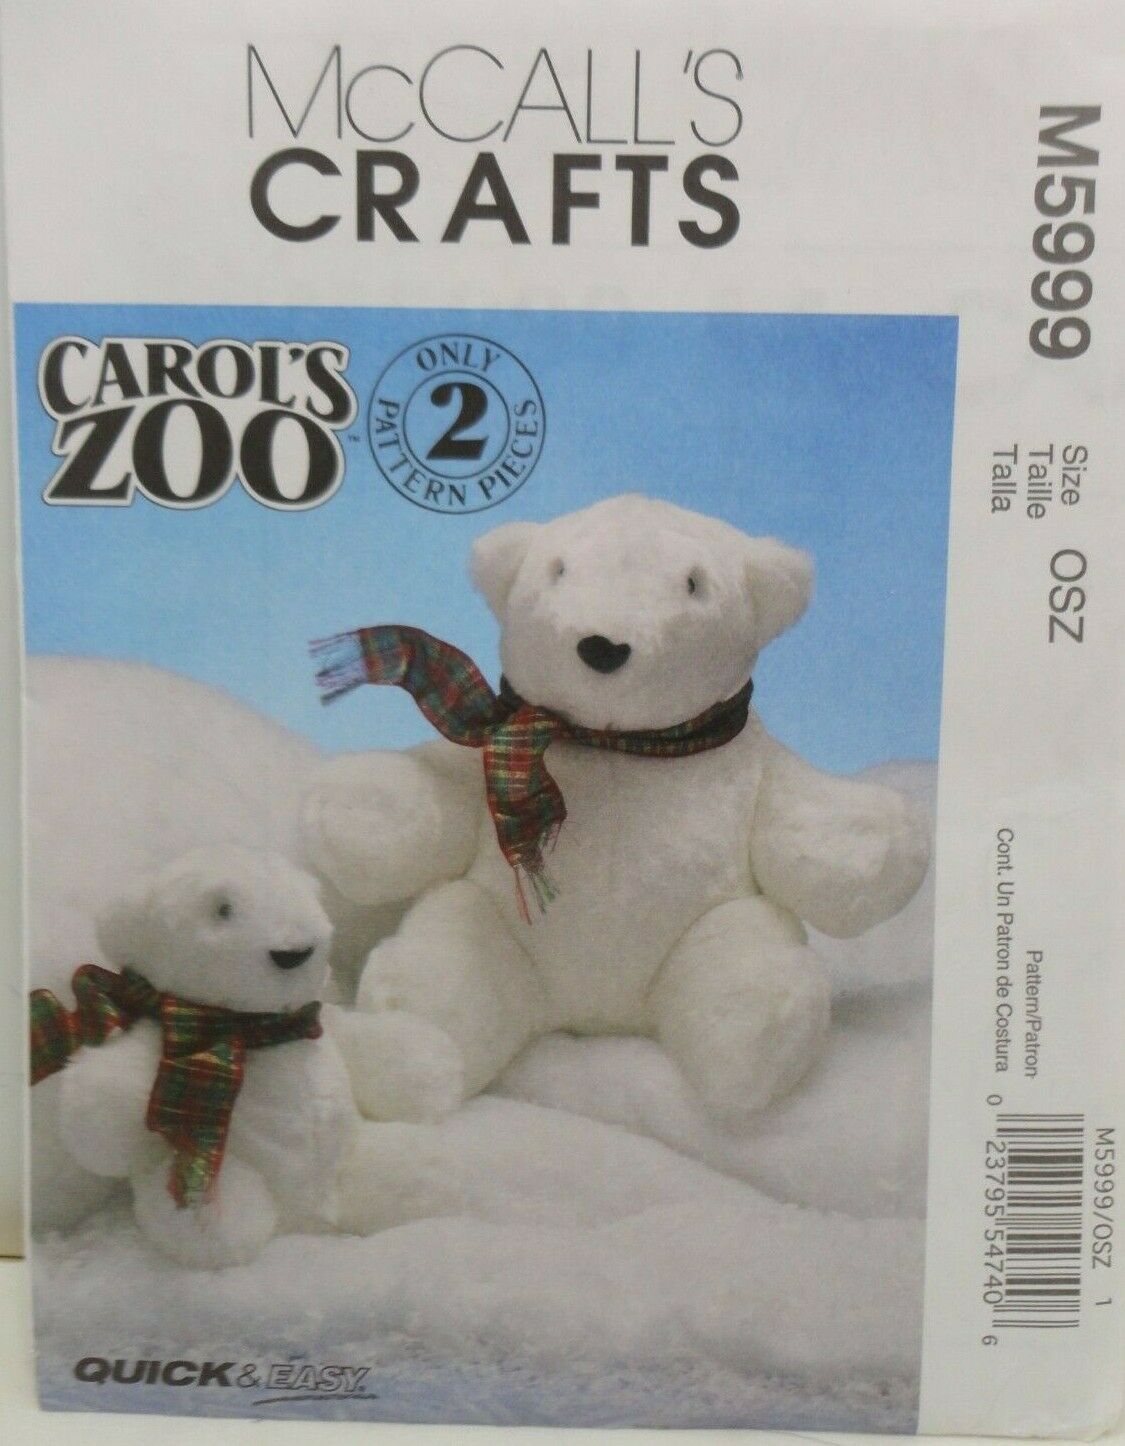 Mccalls Craft Pattern M5999 Polar Bear 2009 Sewing Crafting Plush Stuffed Animal